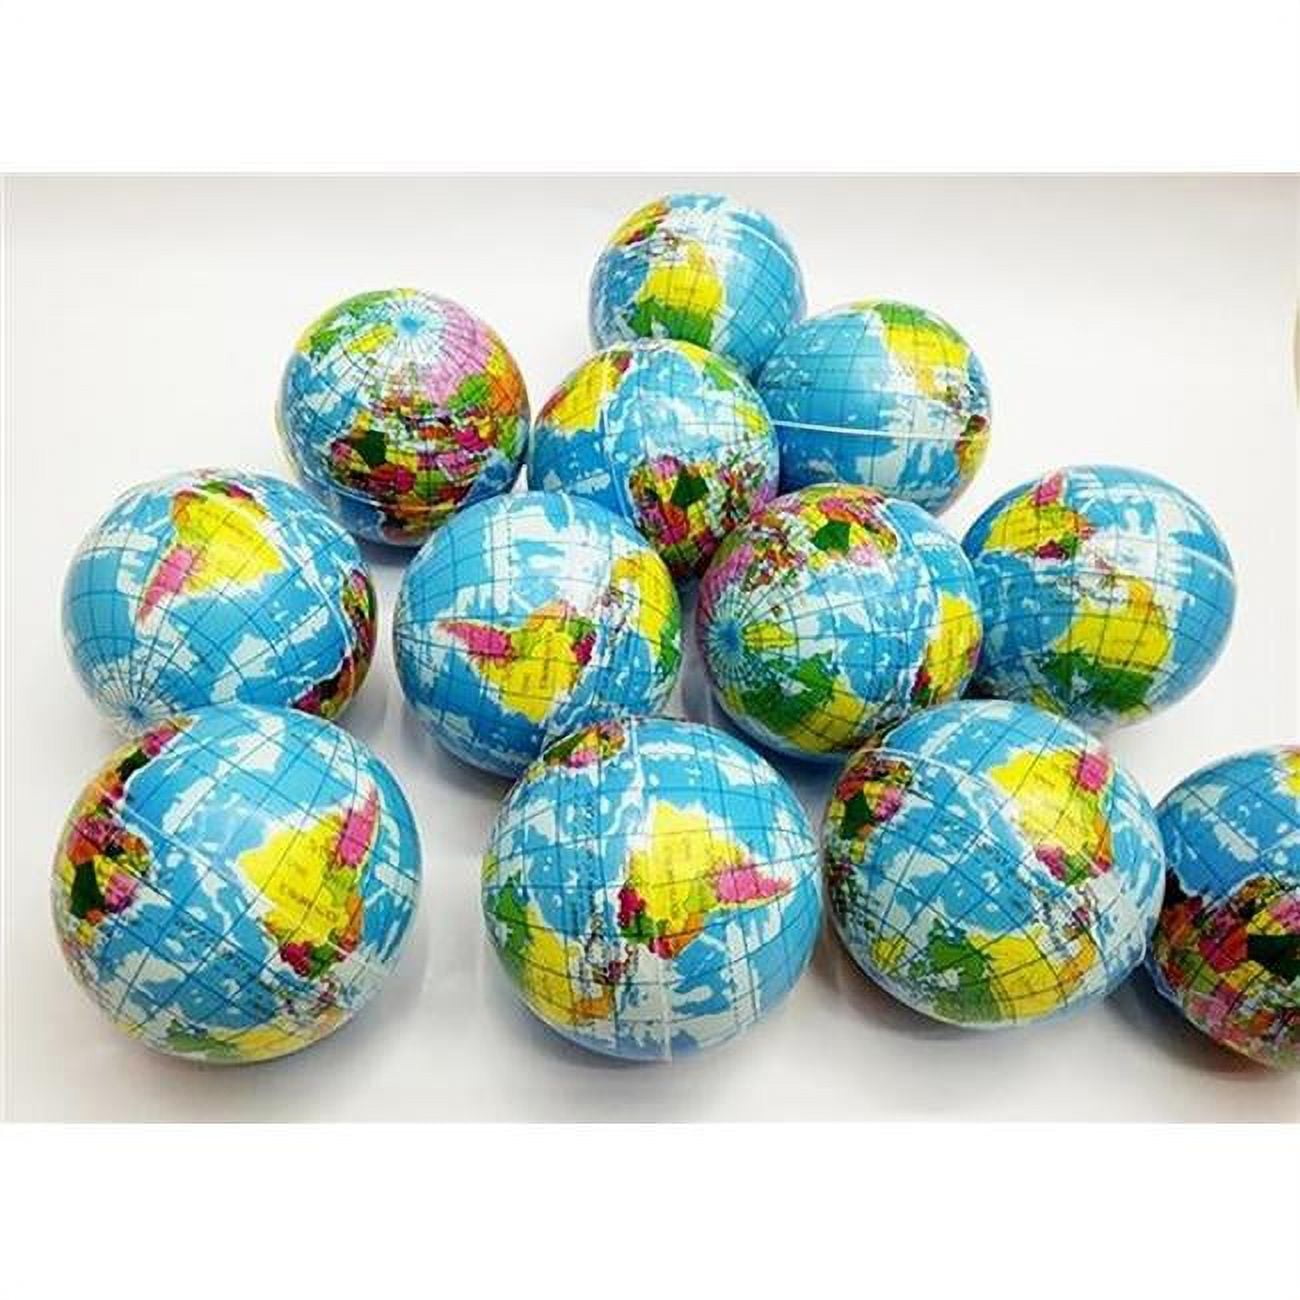 Picture of AZ Trading & Import PSBP24 Mini Planet Earth Soft Foam Stress Balls - 24 Balls Per Box